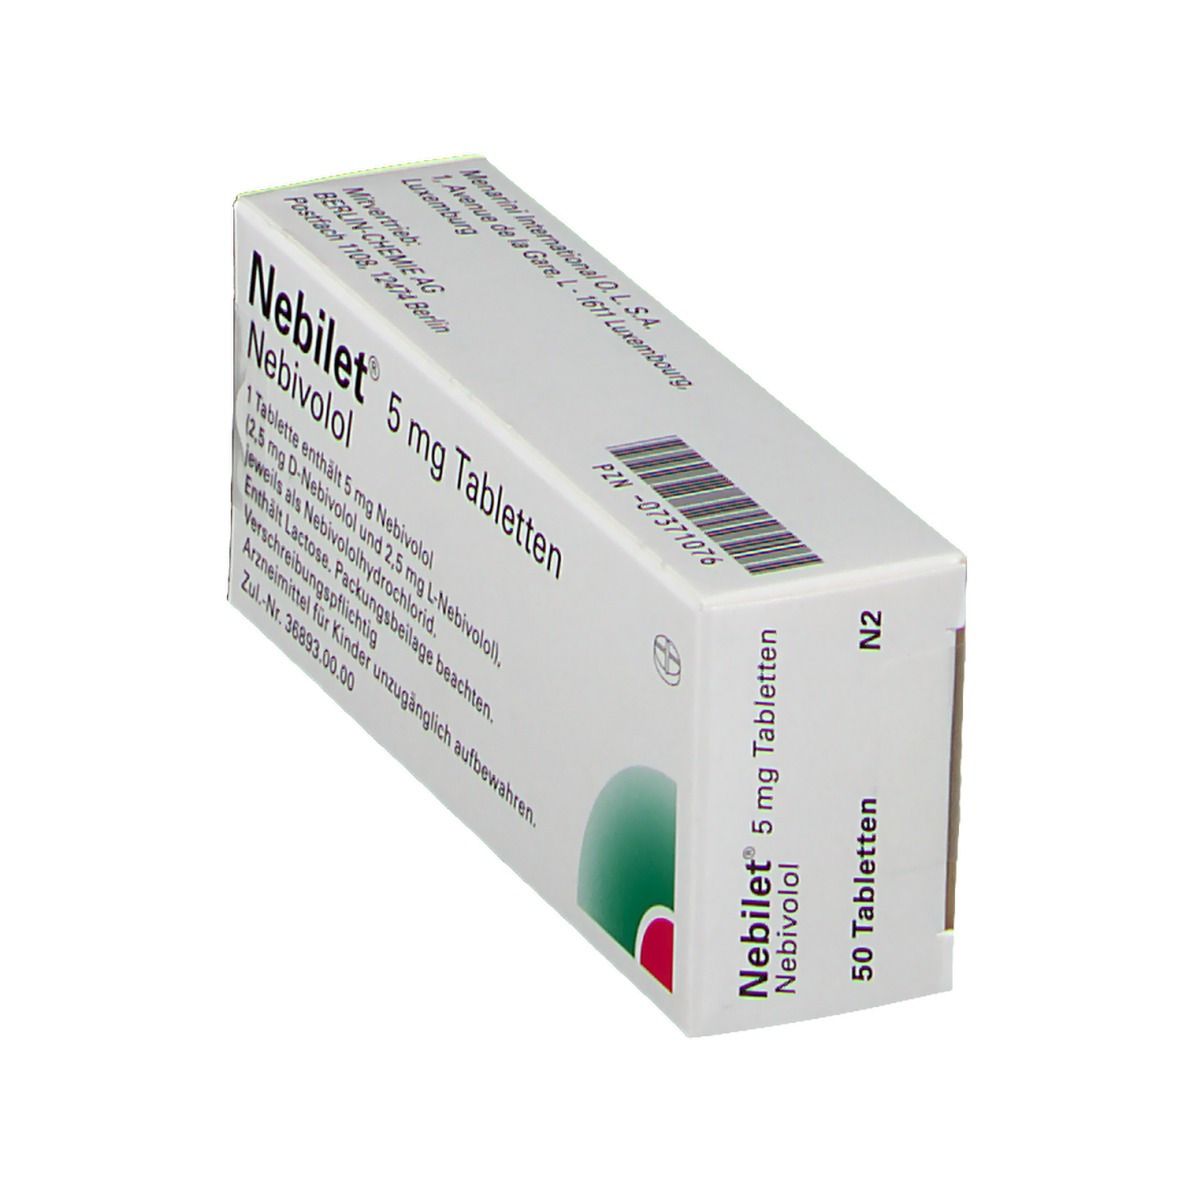 Nebilet® 5 mg